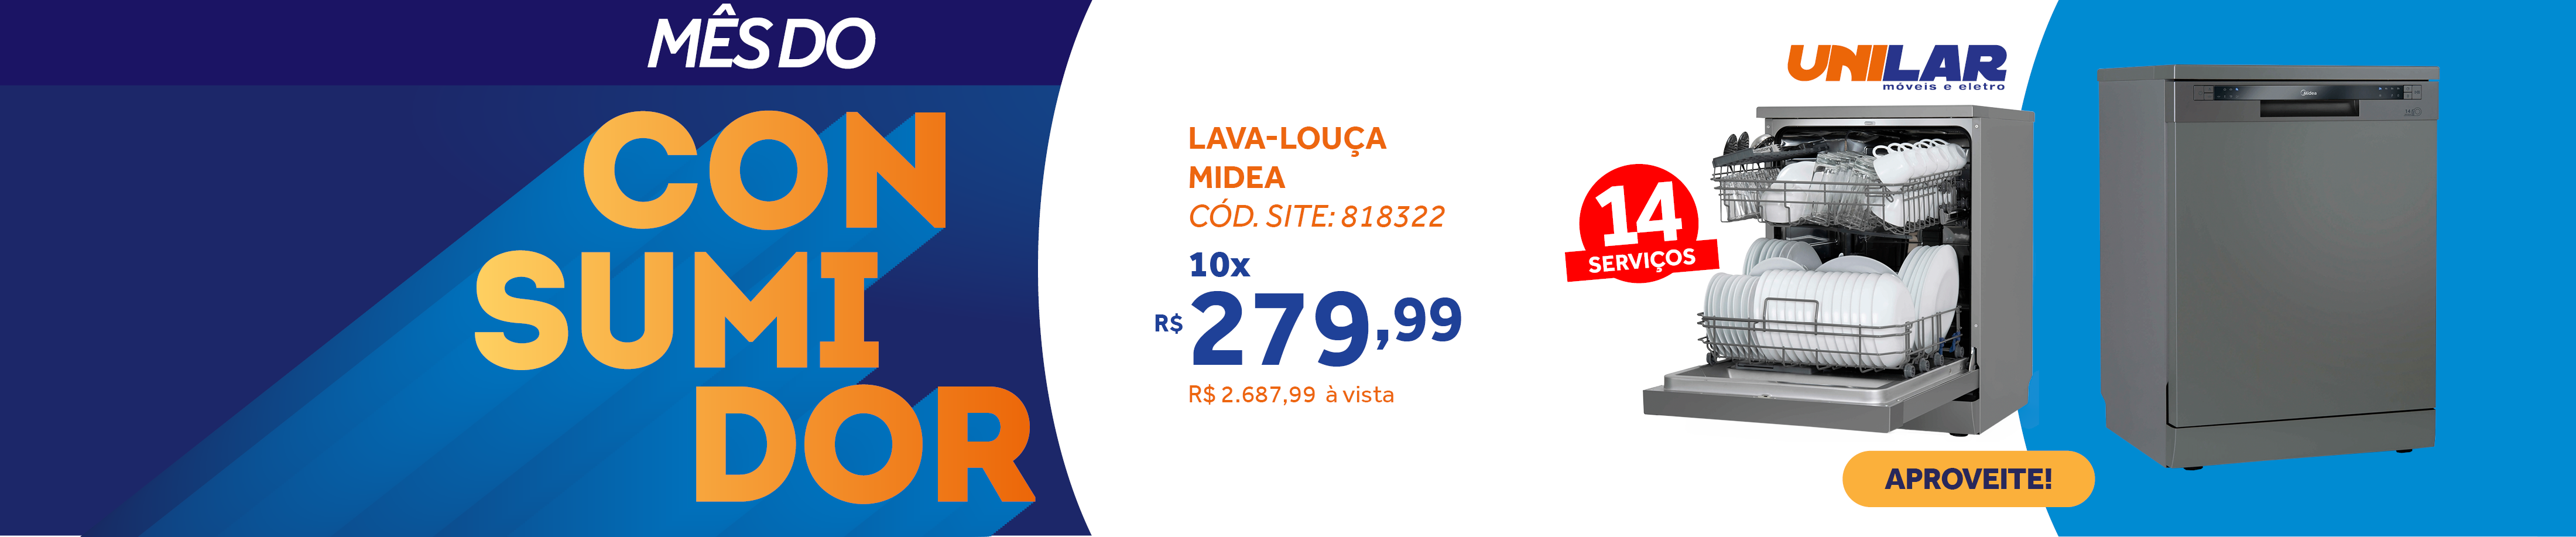 lava-loucas-midea-14-servicos-dwa14s2-programa-eco-cinza-3324/p